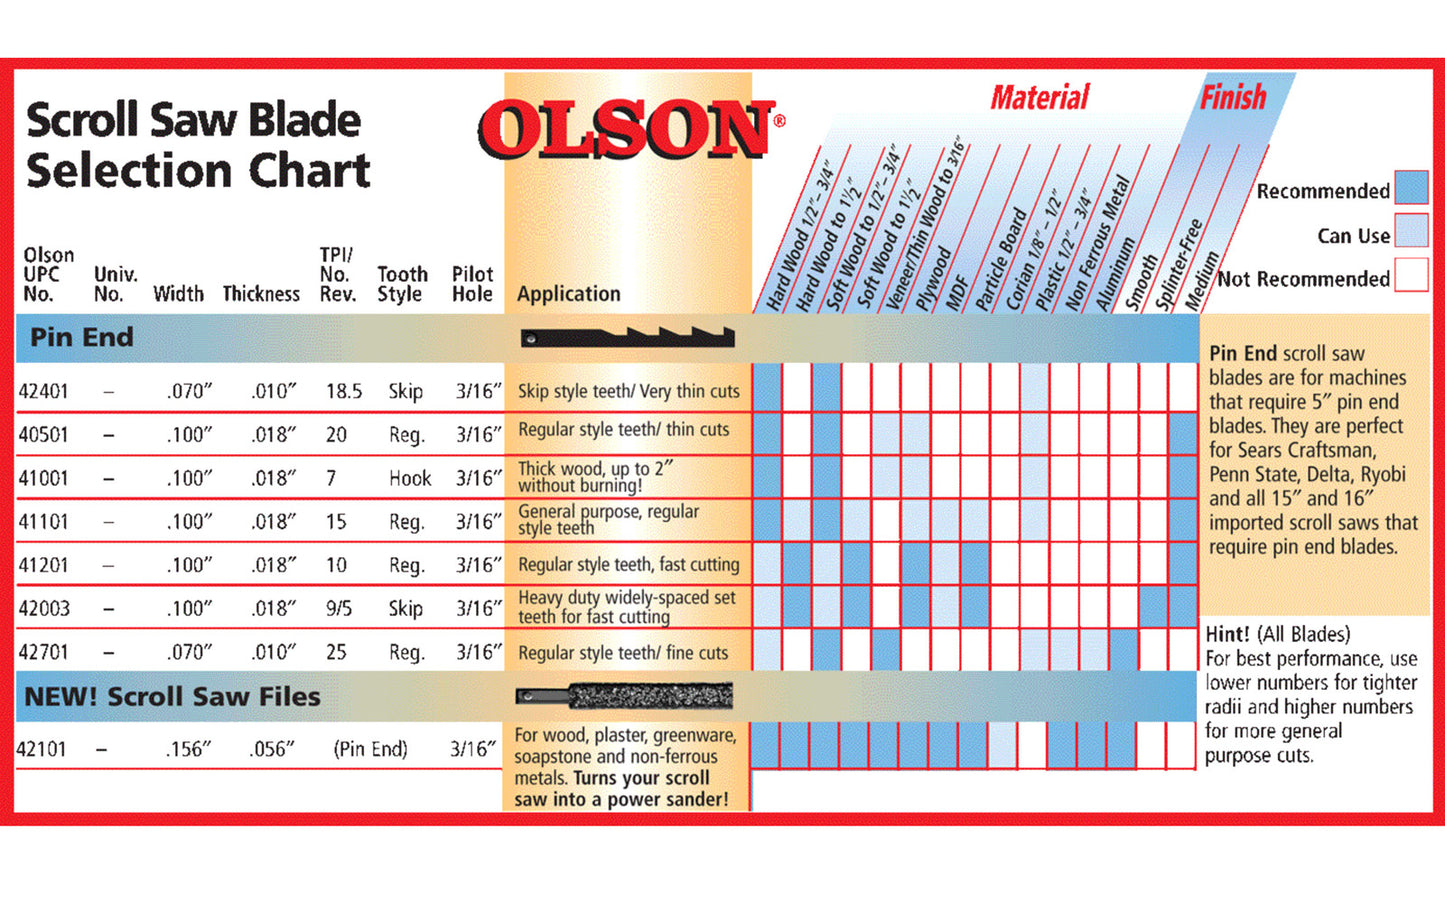 Olson 5" Plain End Scroll Saw 12.5 TPI Skip Tooth Blades - 6 PC Set